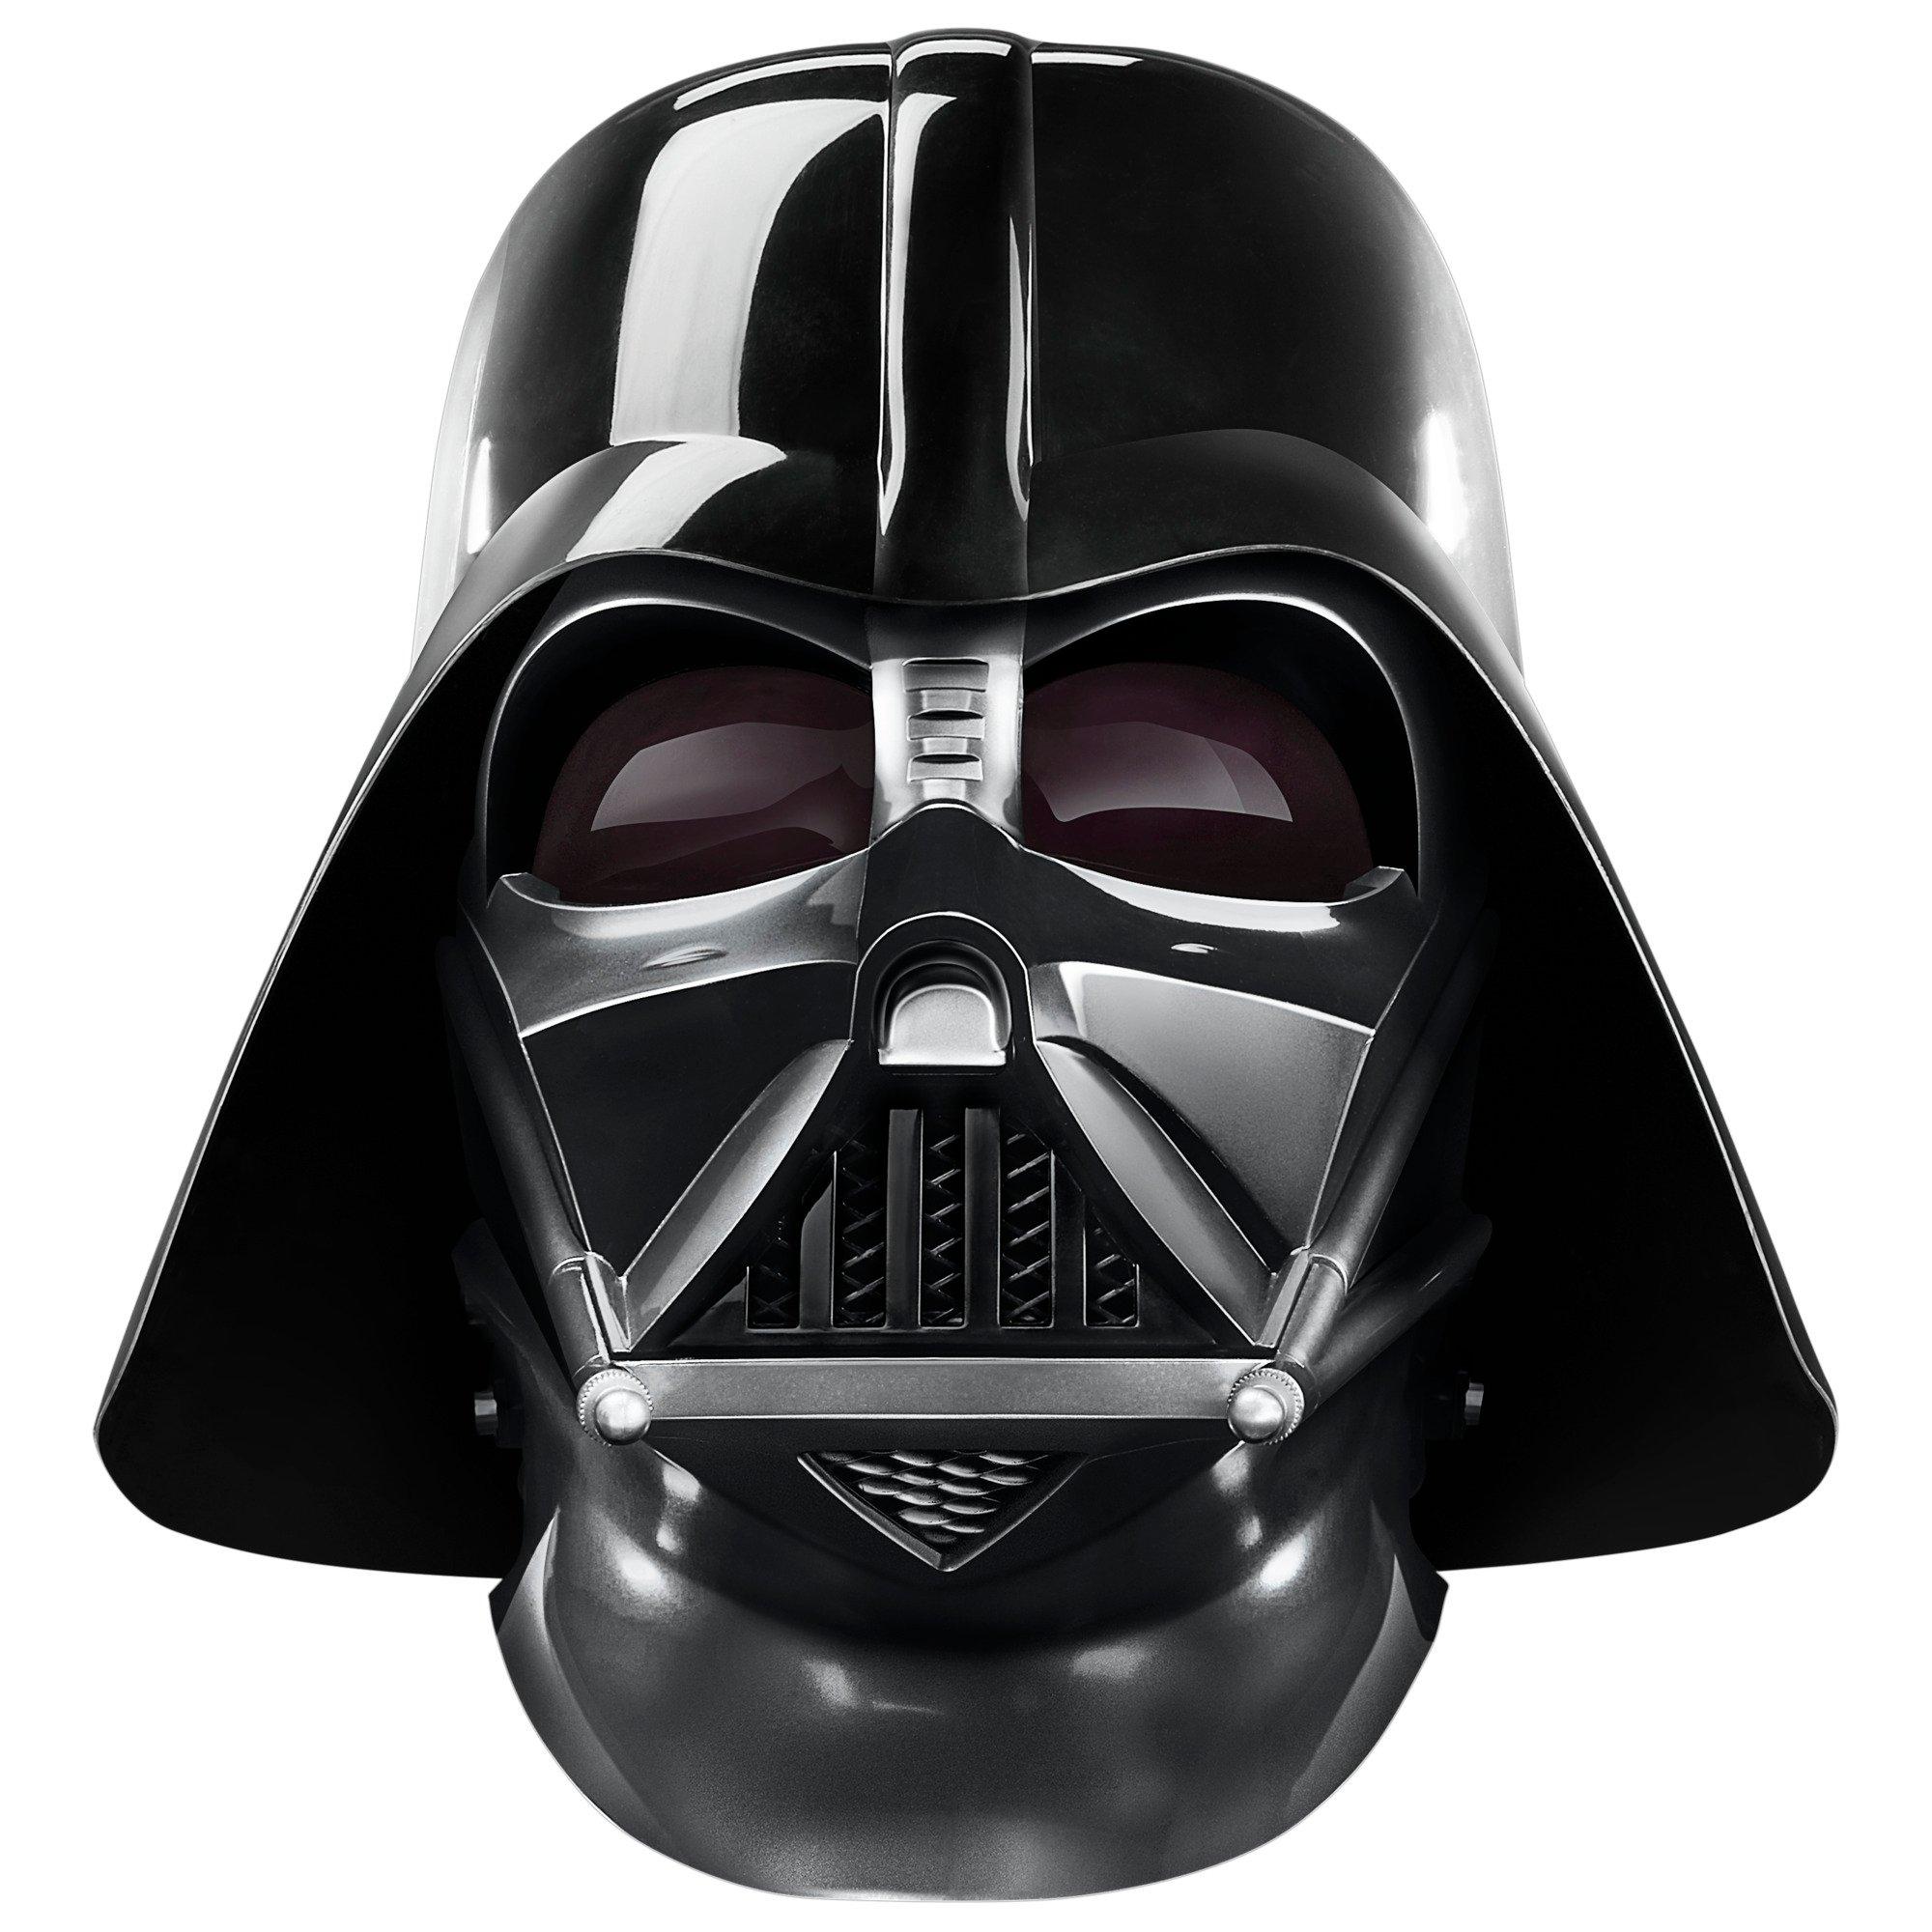 Star Wars Darth Vader Free Time 16oz Pint Glasses GameStop Exclusive 4-Pack